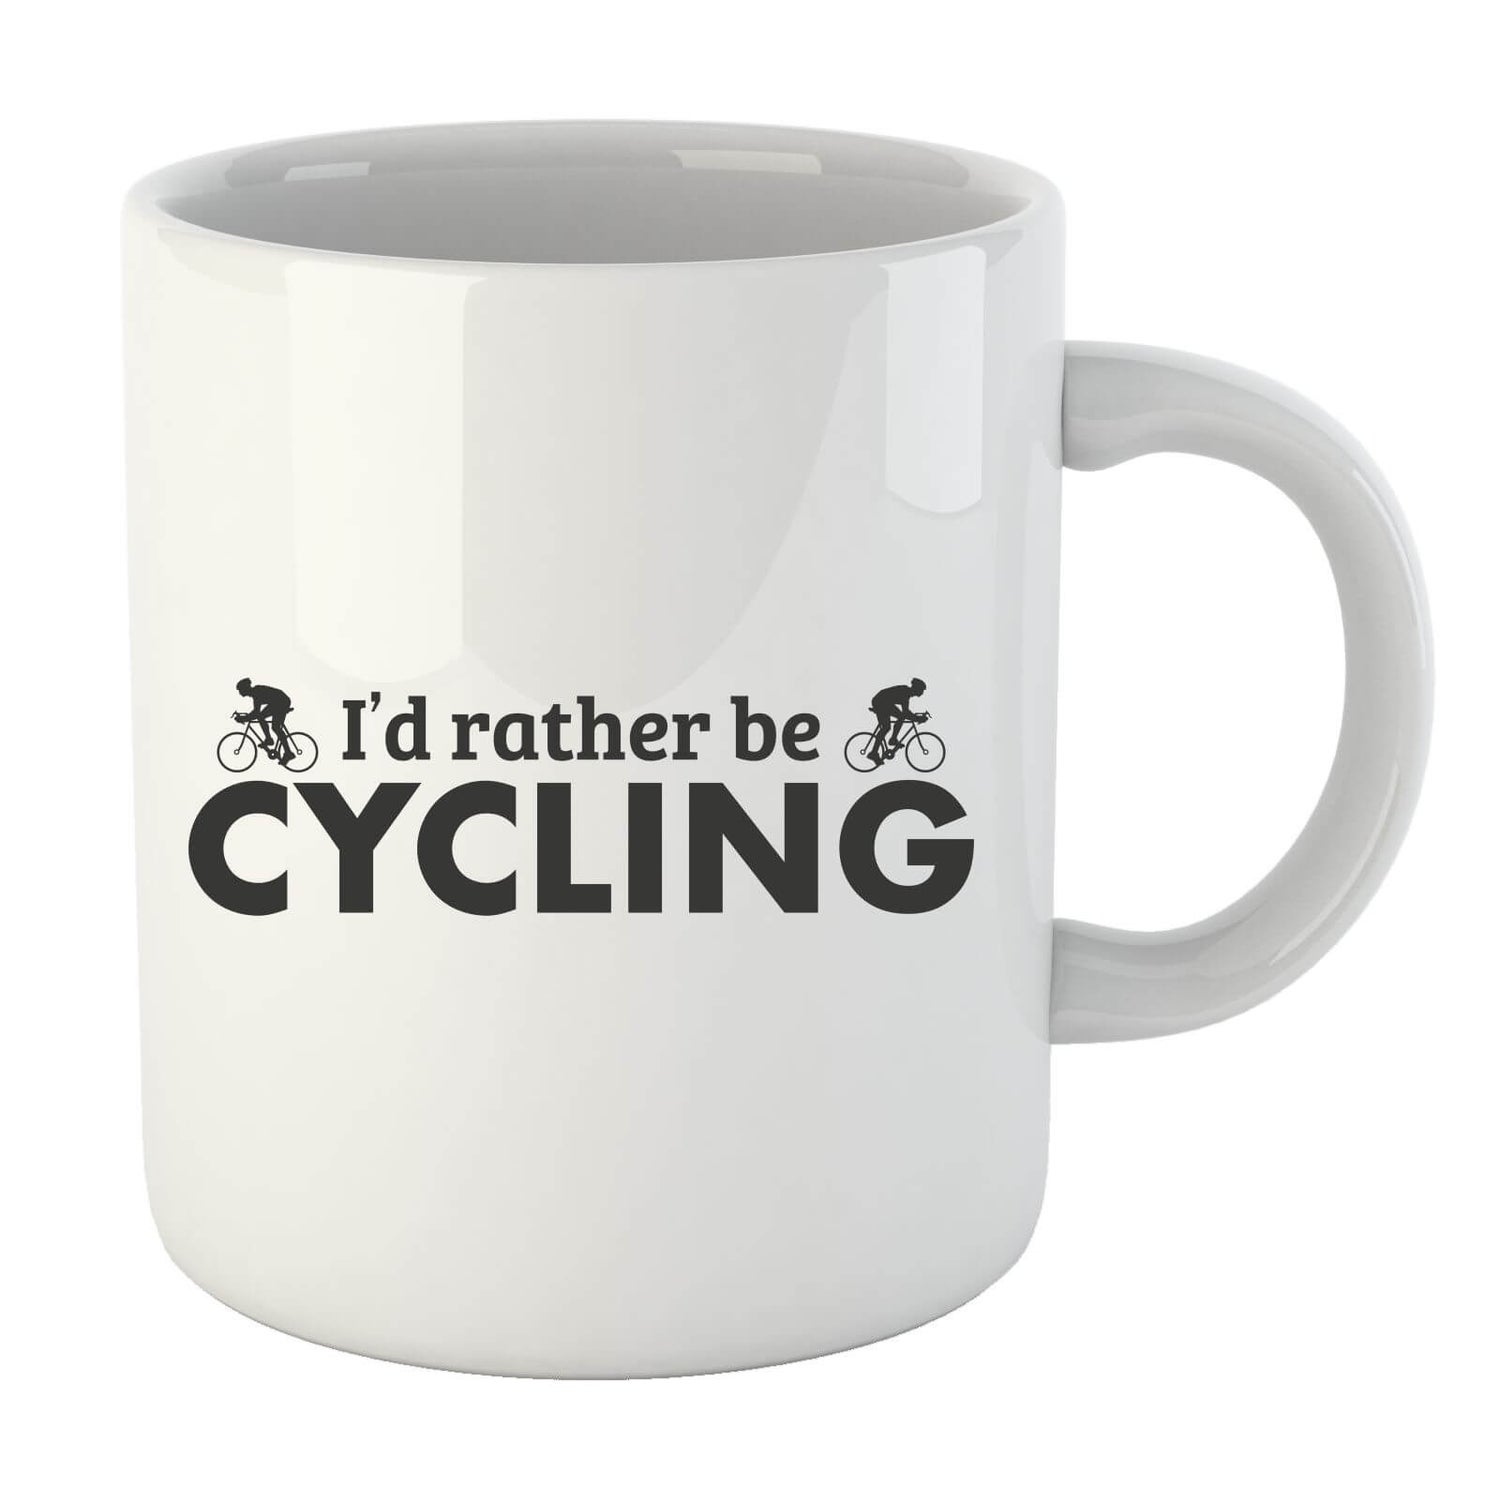 I'd rather be CYCLING Mug 